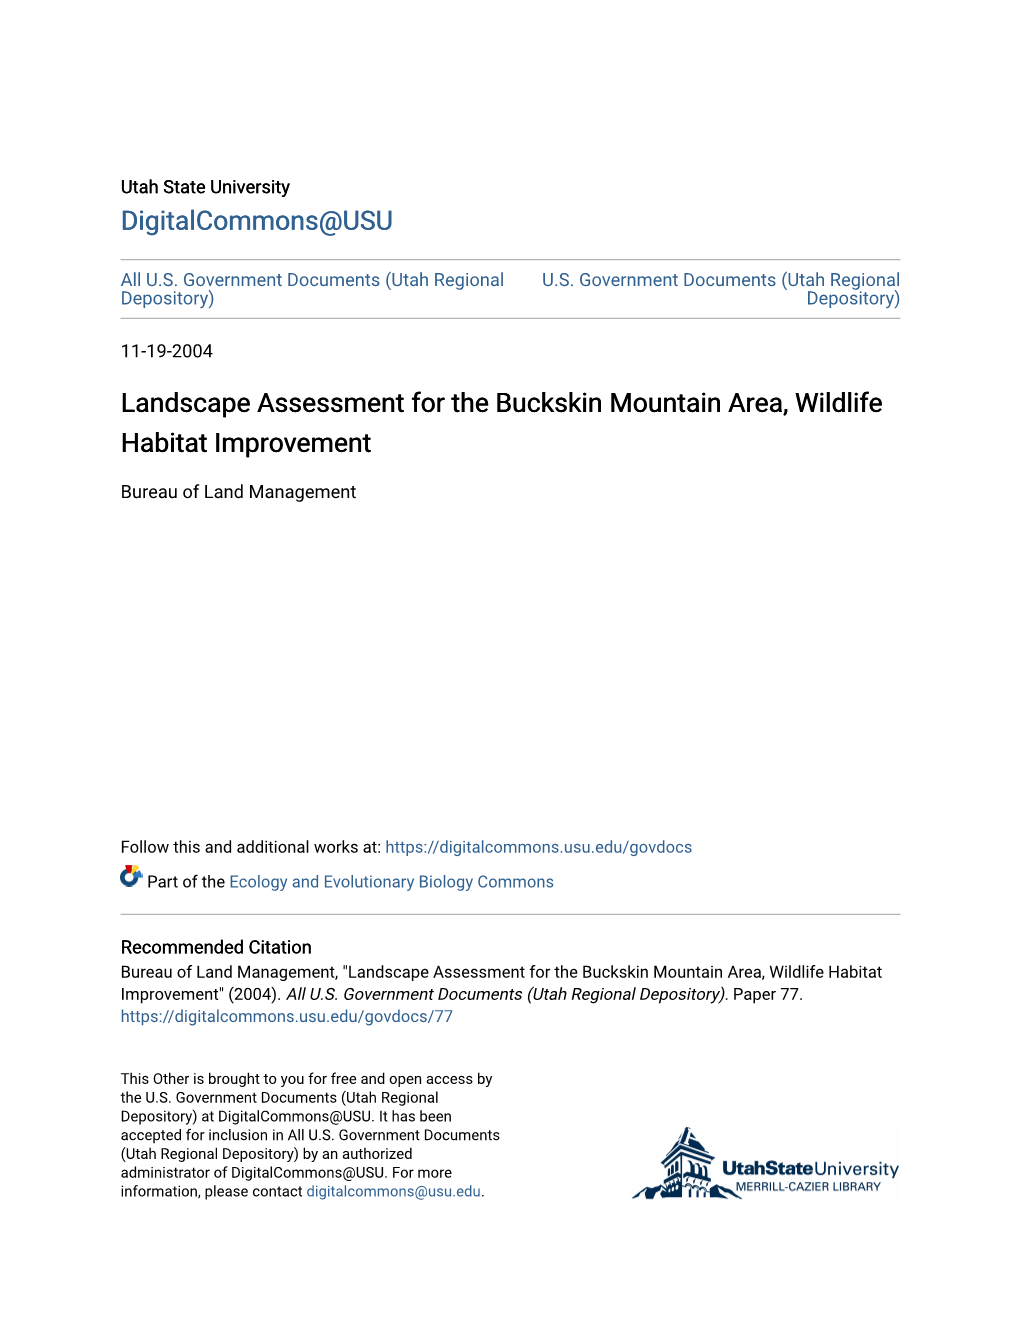 Landscape Assessment for the Buckskin Mountain Area, Wildlife Habitat Improvement